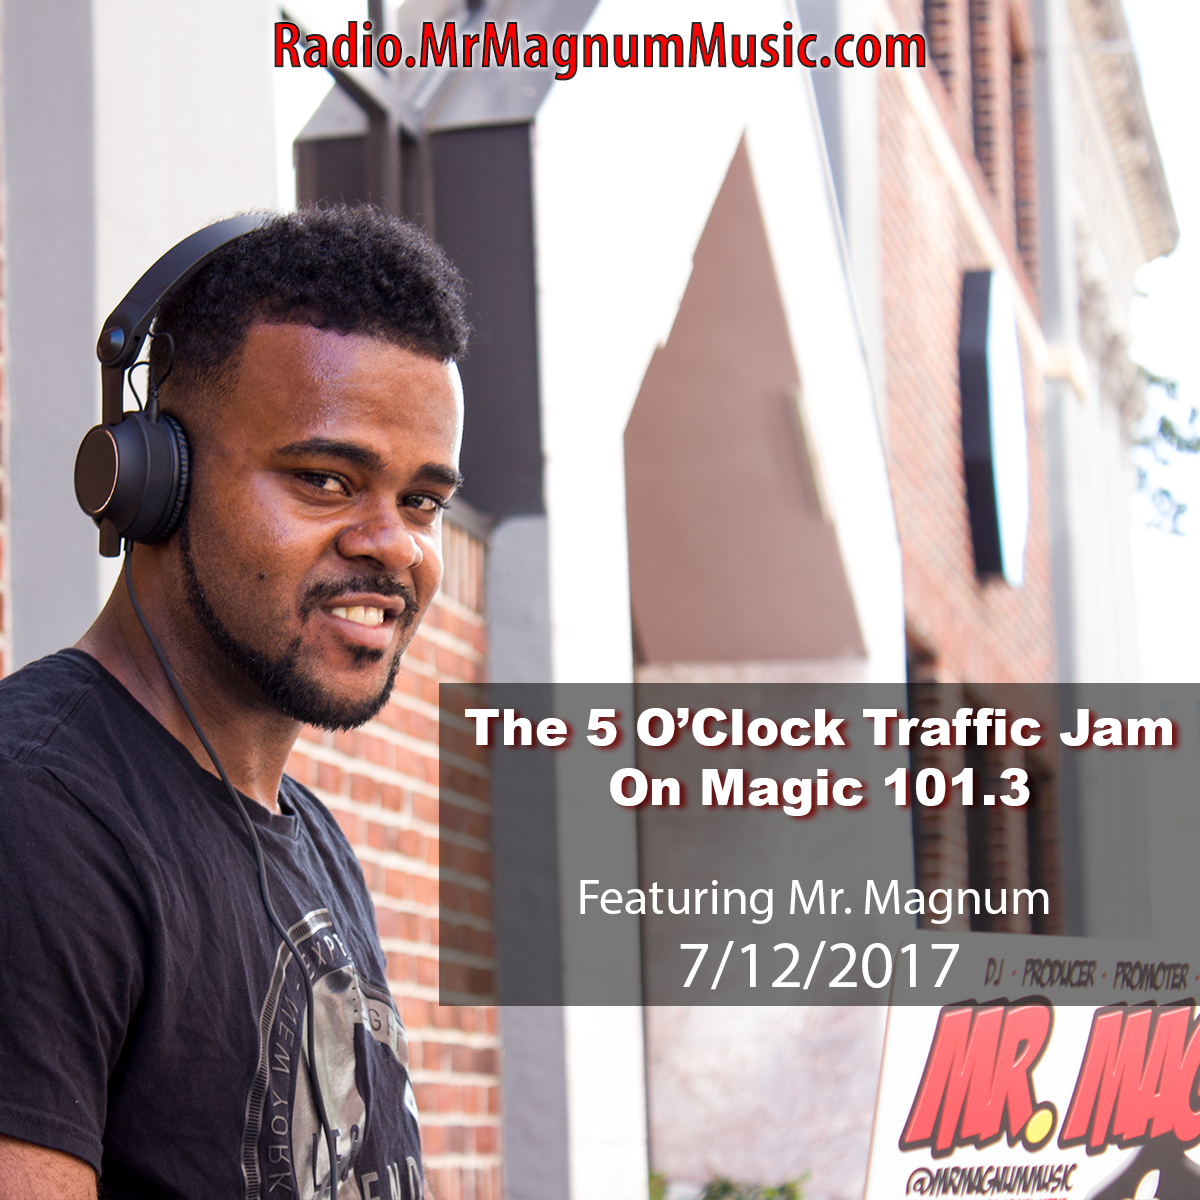 The 5 O'Clock Traffic Jam 20170712 featuring Gainesville's #1 DJ, Mr. Magnum on Magic 101.3